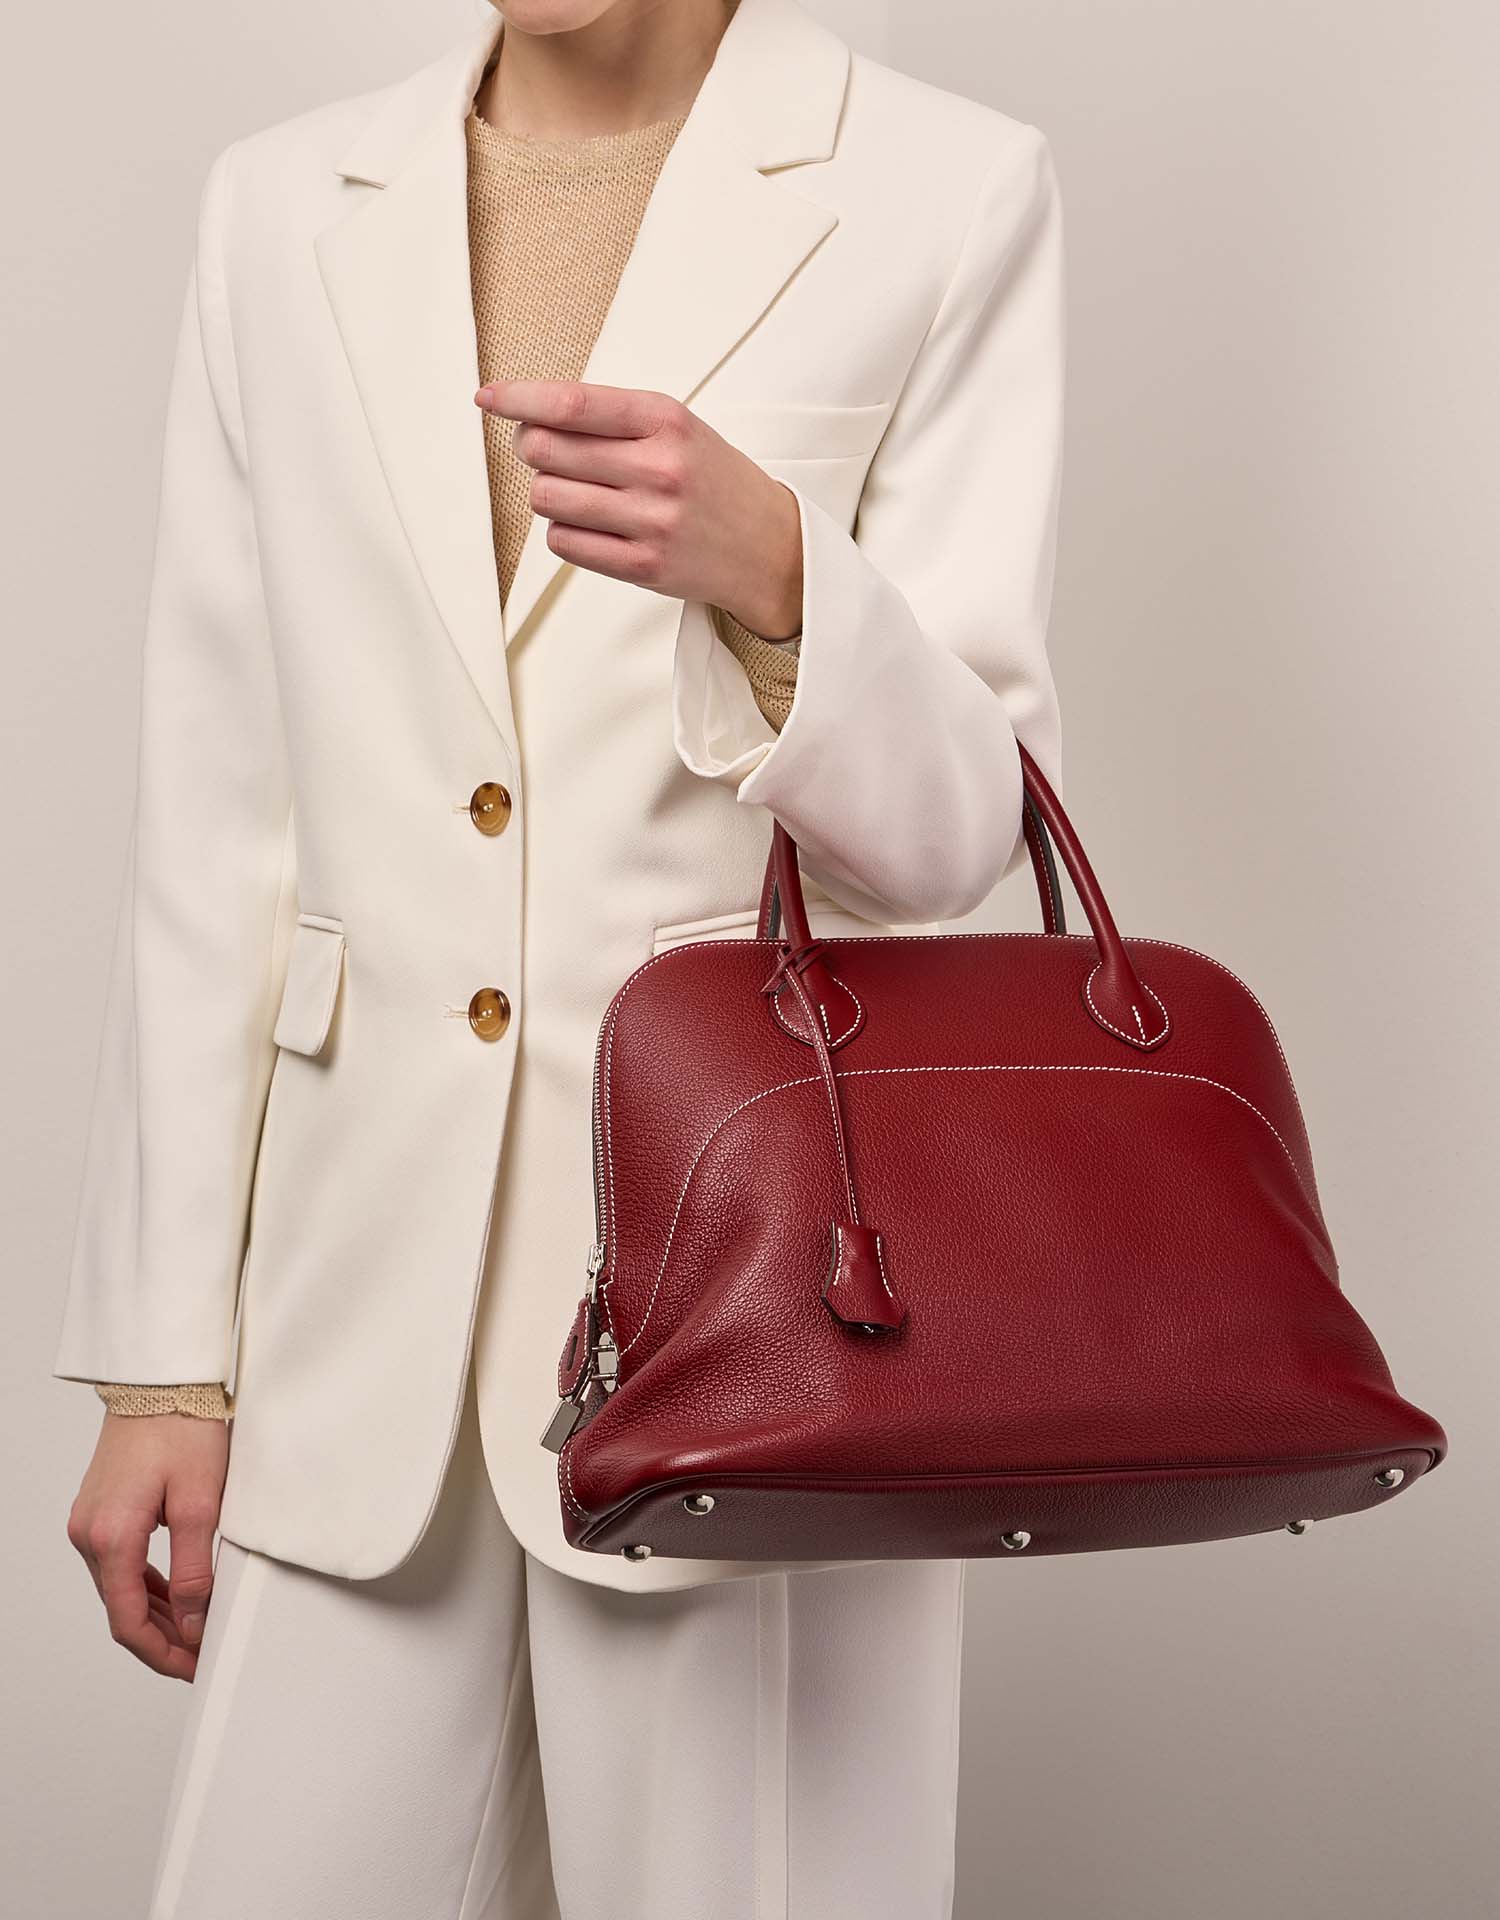 Hermès Bolide 35 RougeGrenat Sizes Worn | Sell your designer bag on Saclab.com